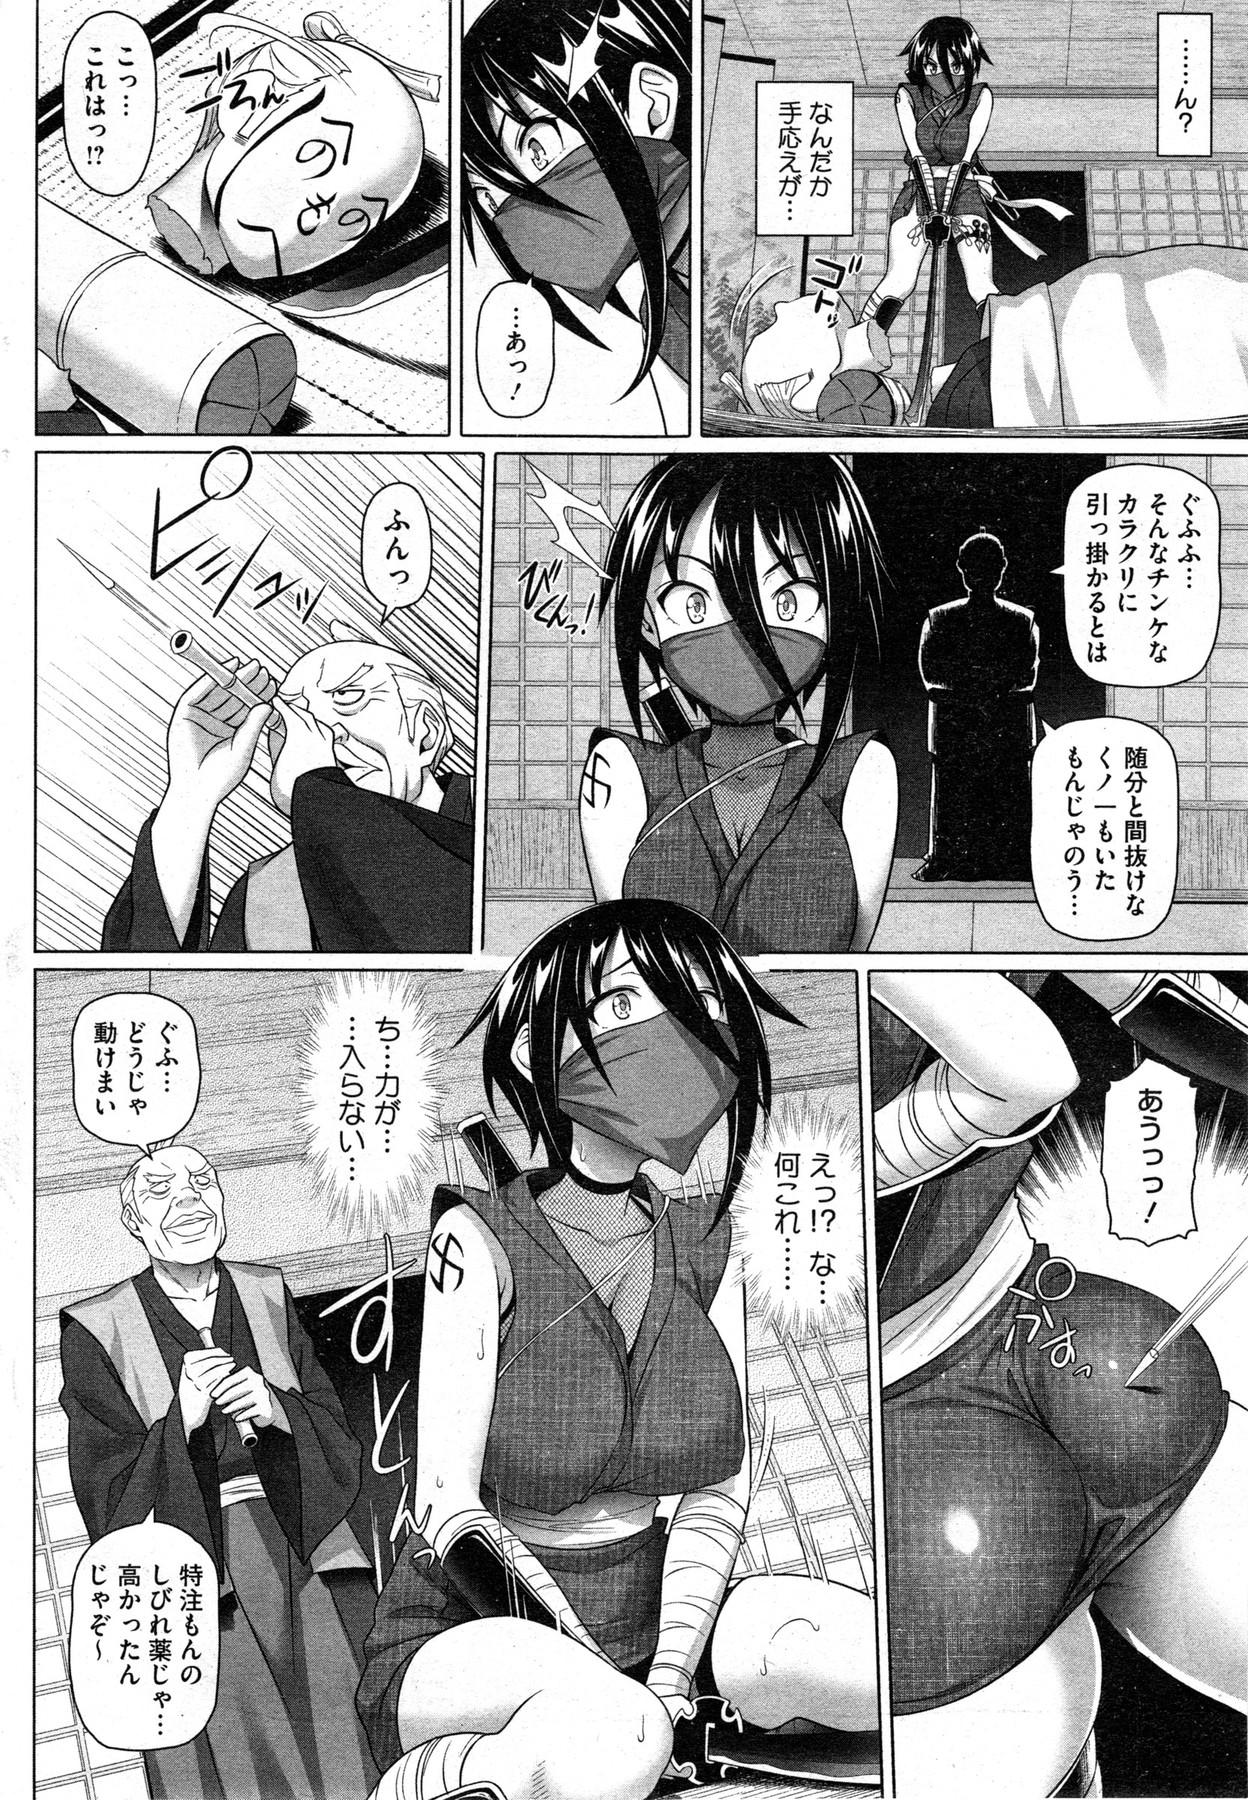 Parody Imaichi! Kunoichi Nudity - Page 2